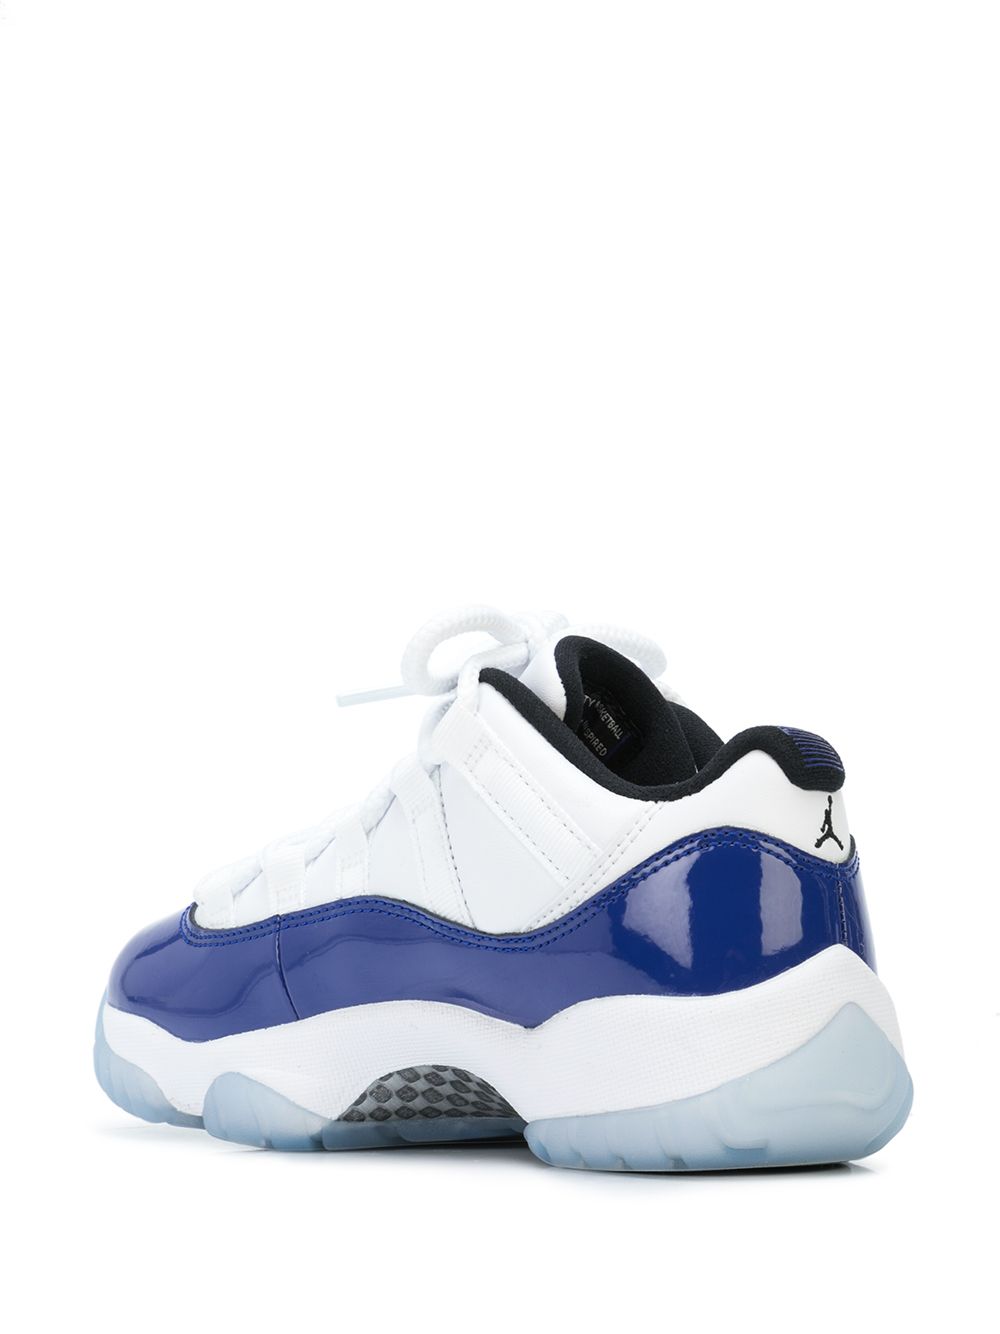 NEW FASHION] Louis Vuitton Blue Monogram Air Jordan 11 Sneakers